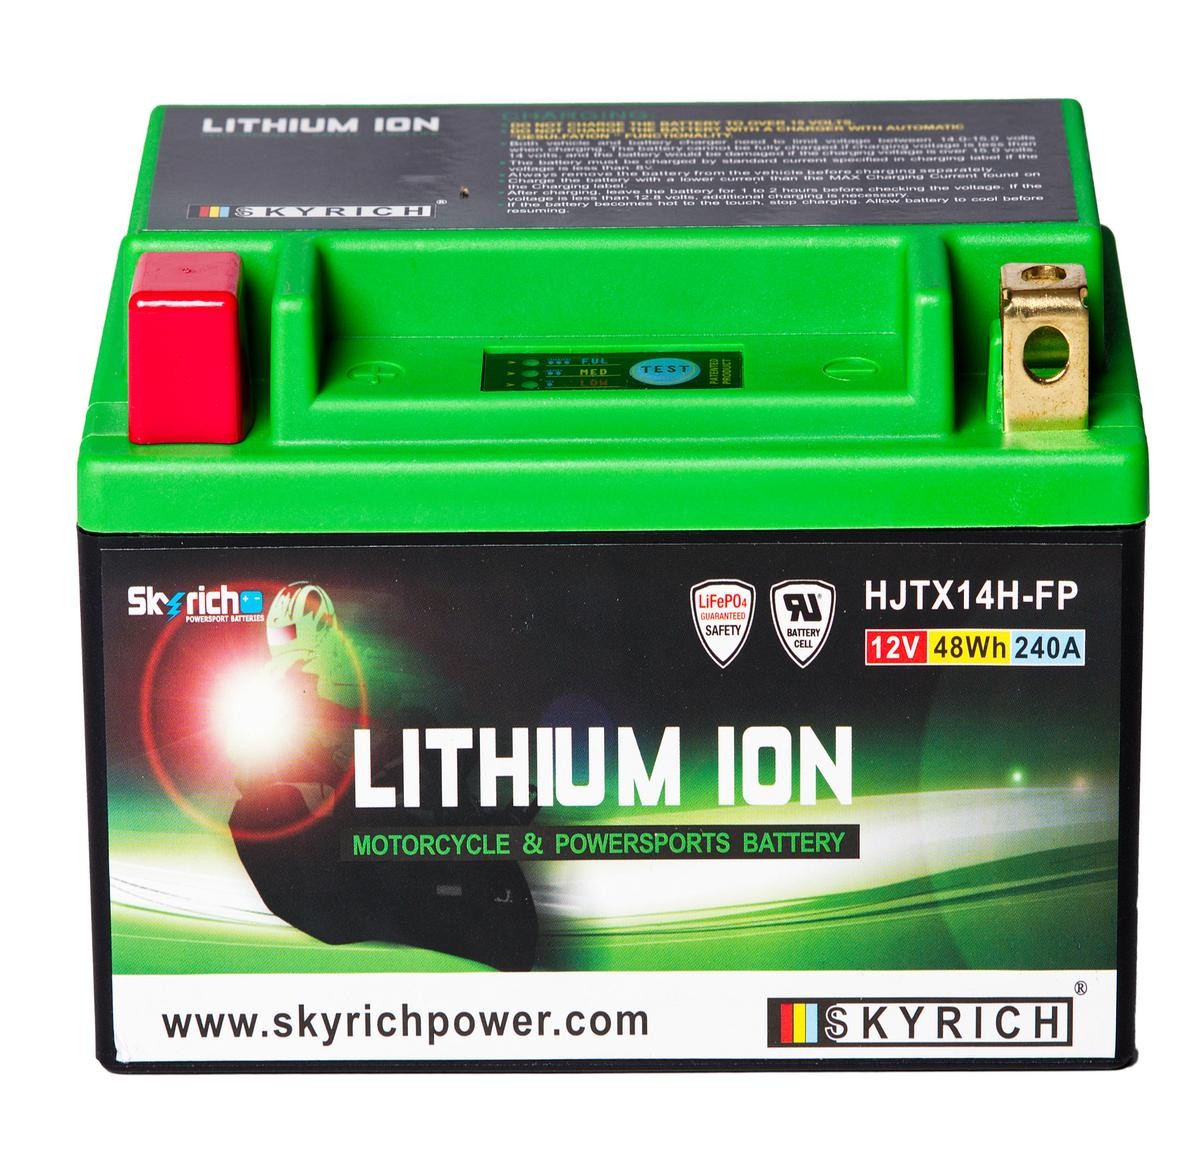 SKYRICH LITHIUM ION Batterie 12V 4Ah 240A N Li-Ionen-Batterie HJTX14H-FP APRILIA Mofa Maxi-Scooter